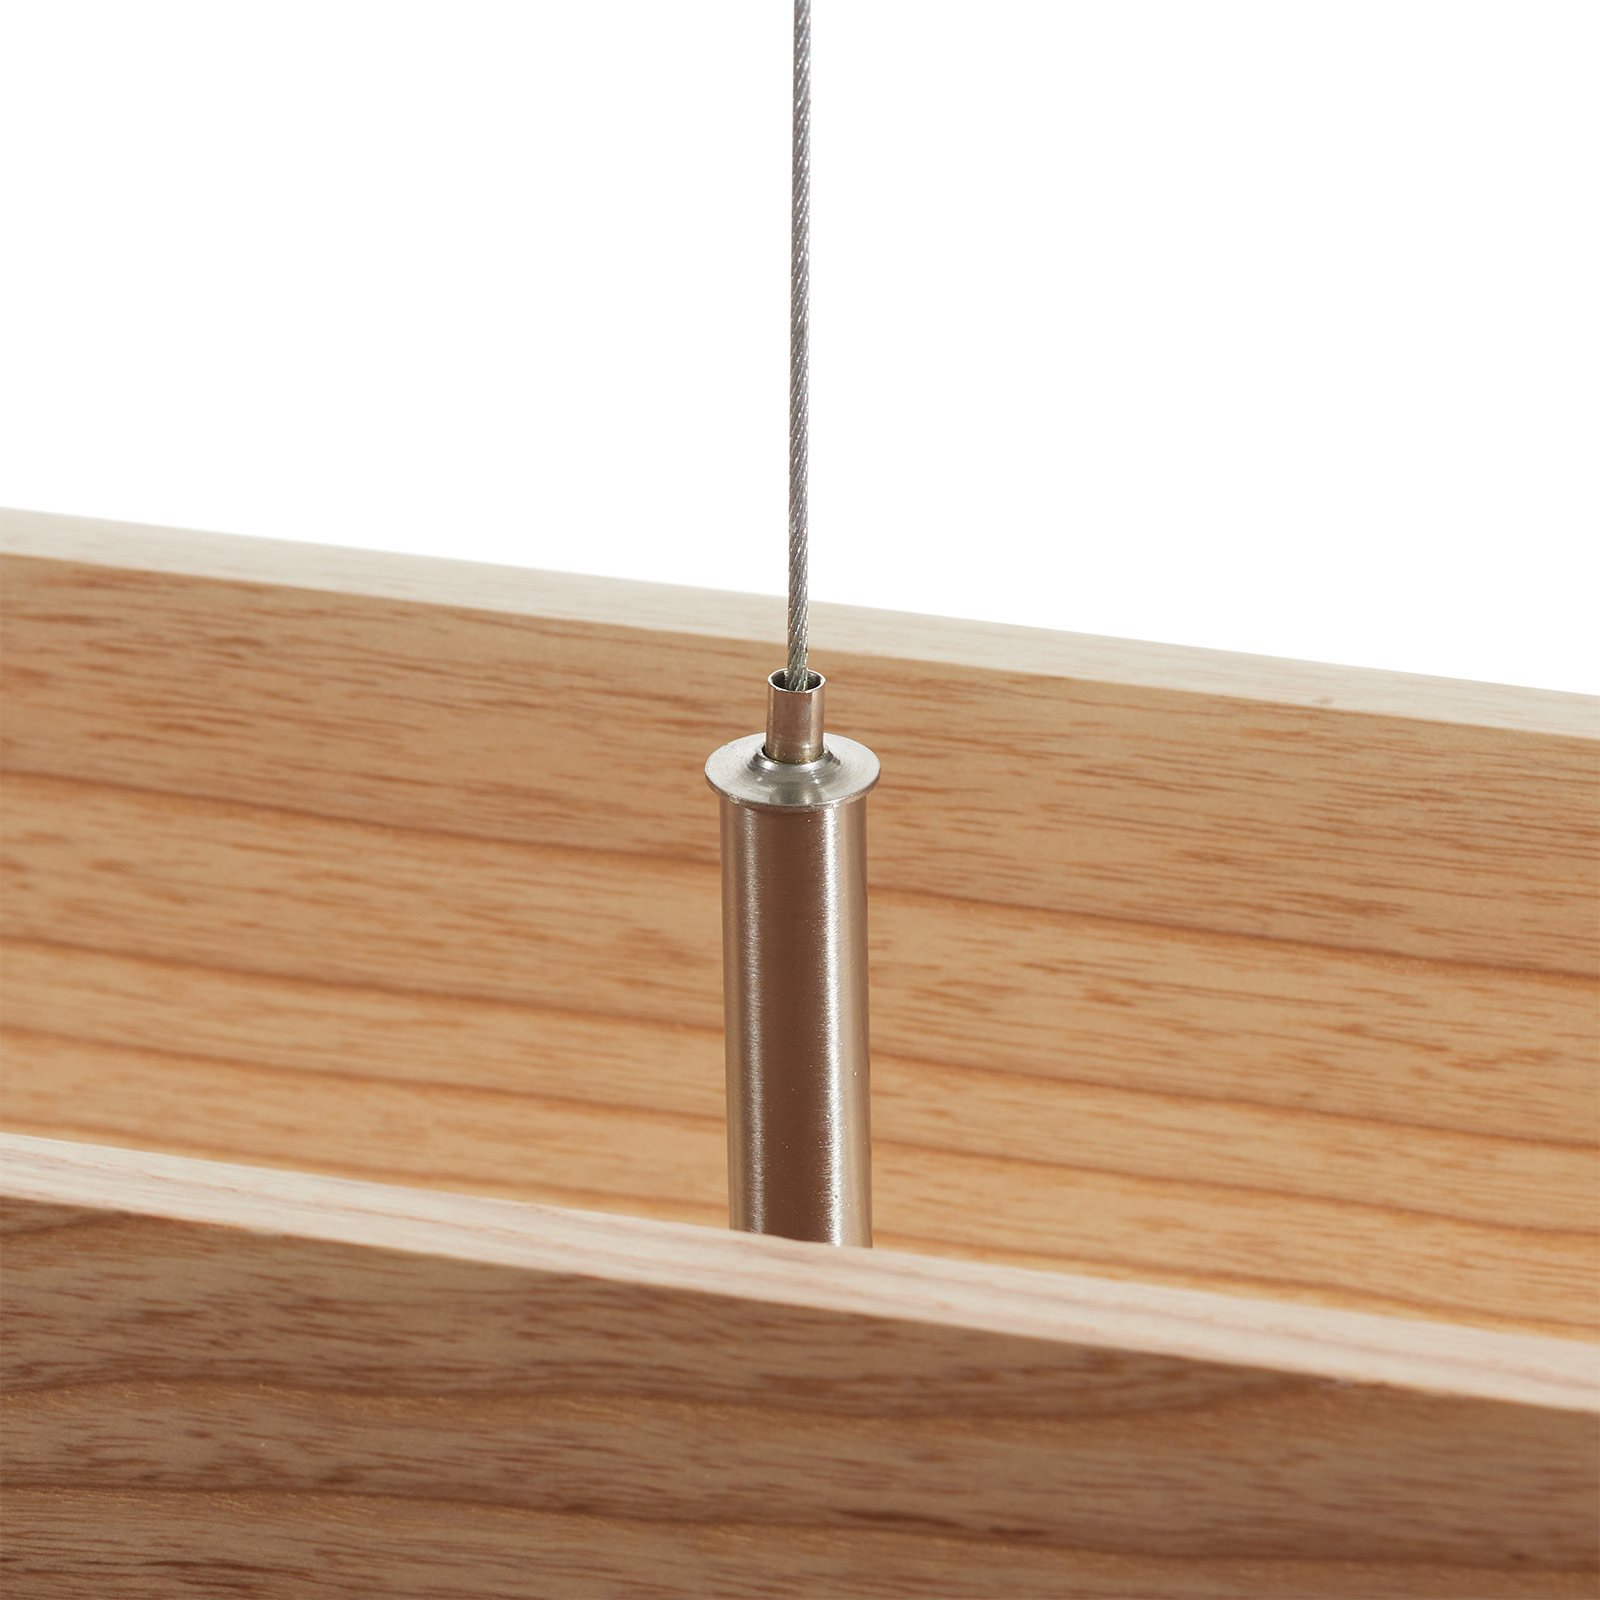 Ash LED pendant light lampshade made of light wood